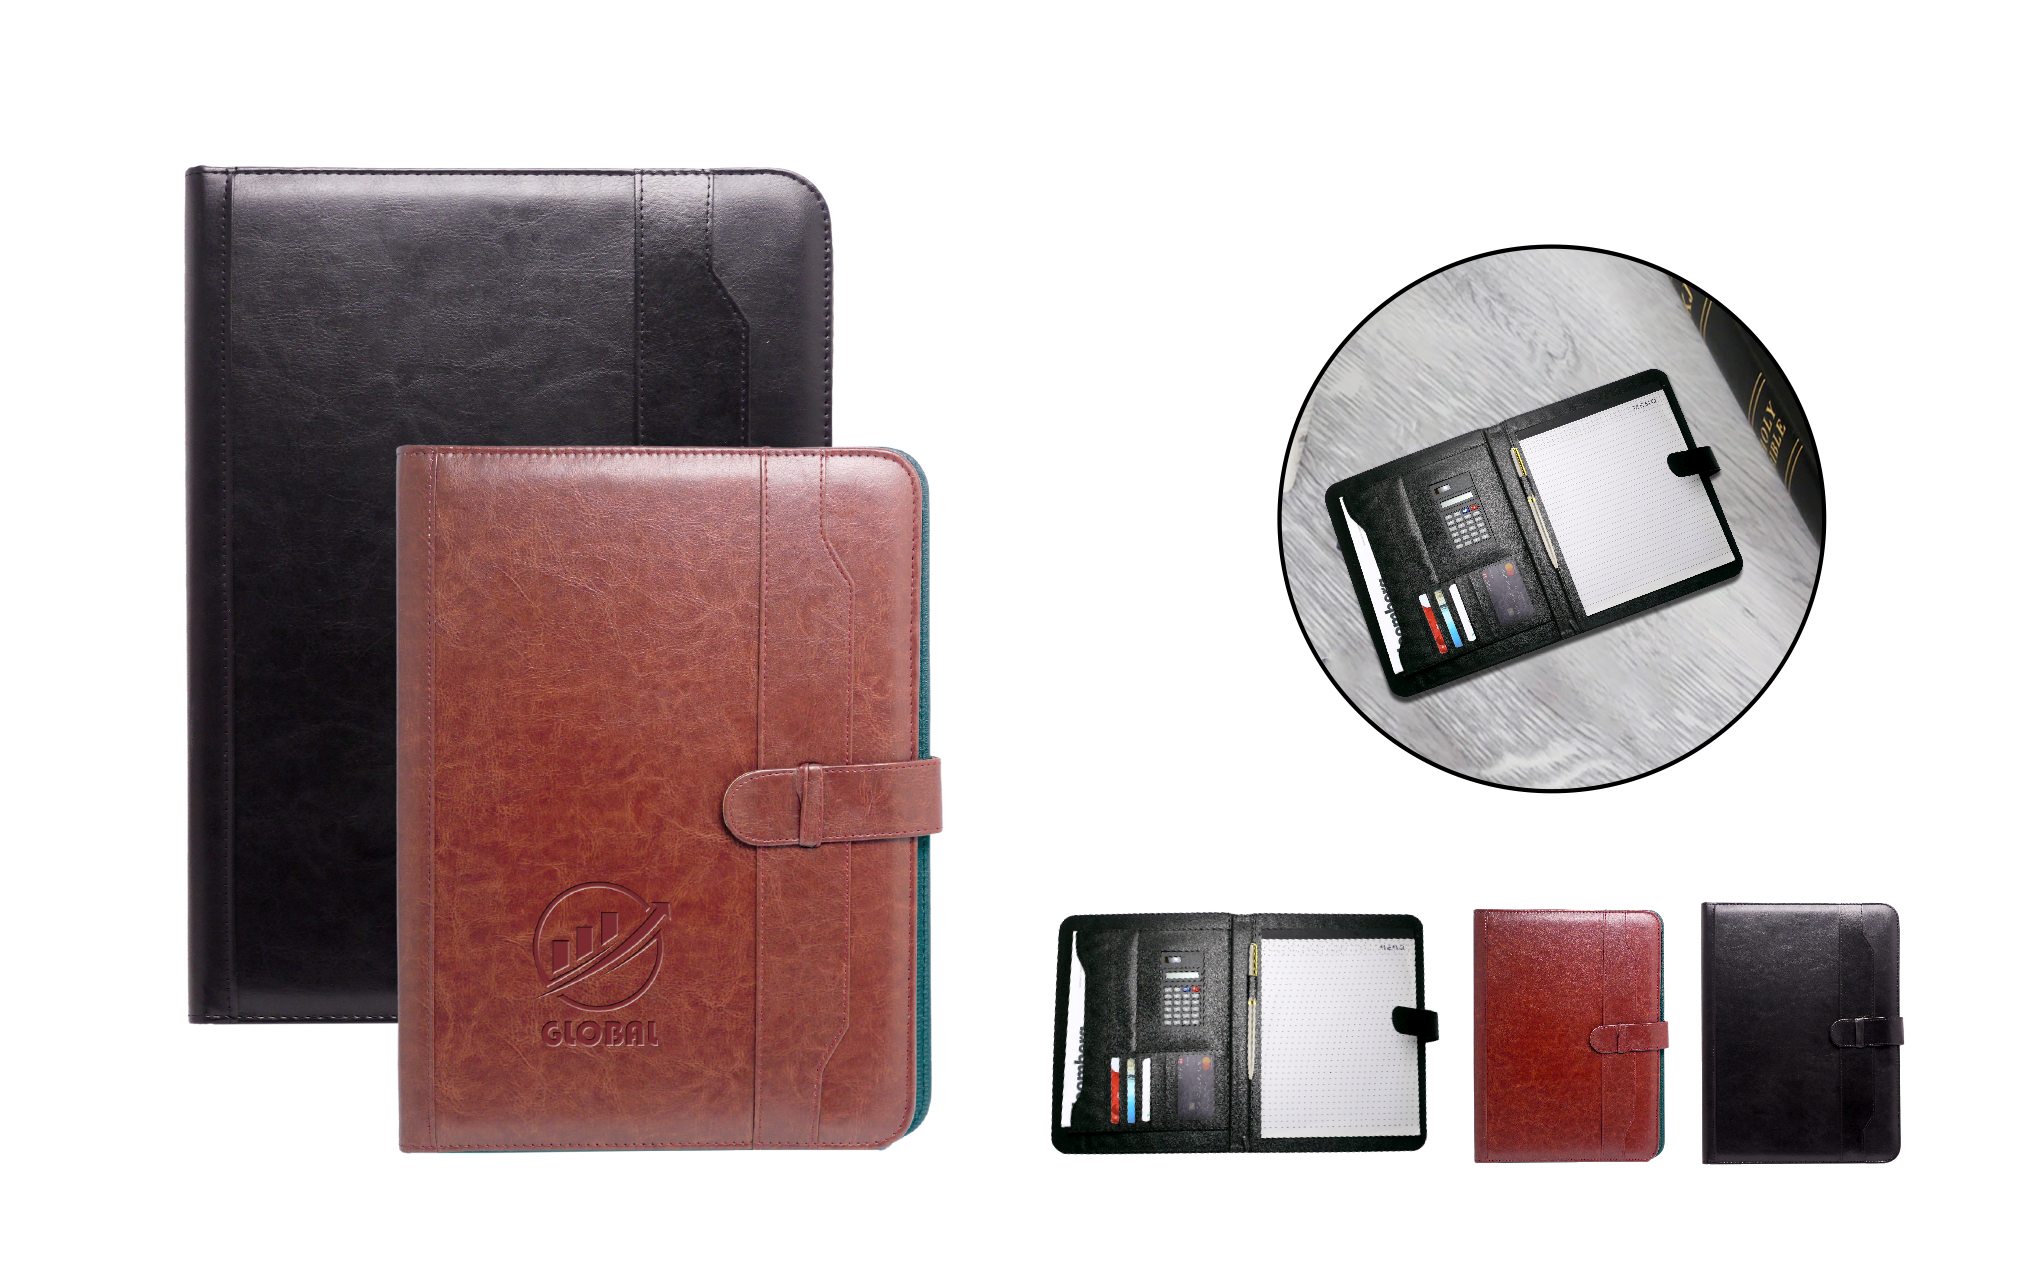 Leather A4 portfolio with solar powered calculator